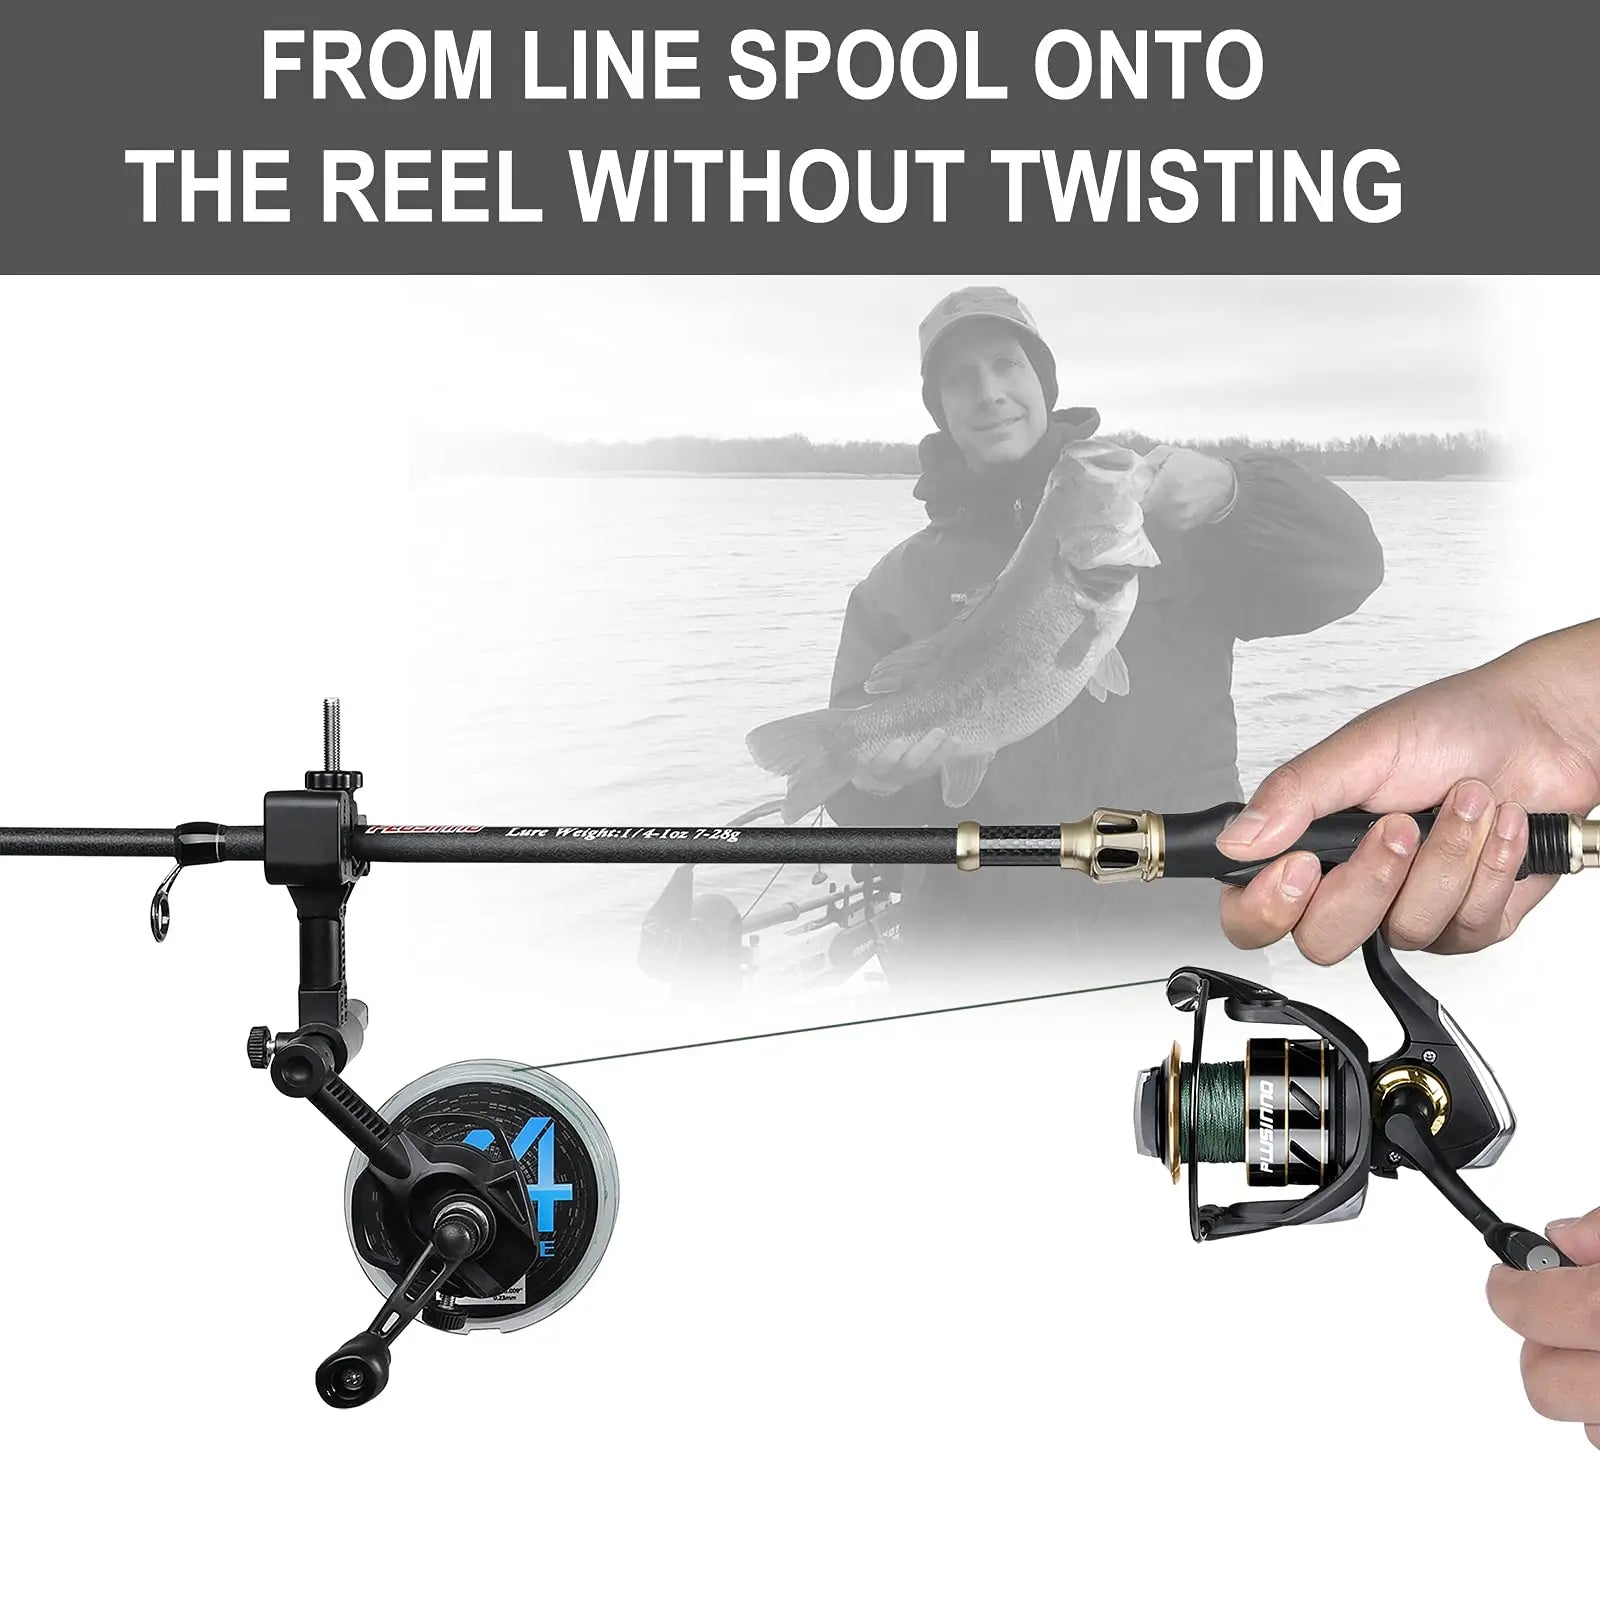 PLUSINNO FLS2 Fishing Line Spooler with Unwinding Function